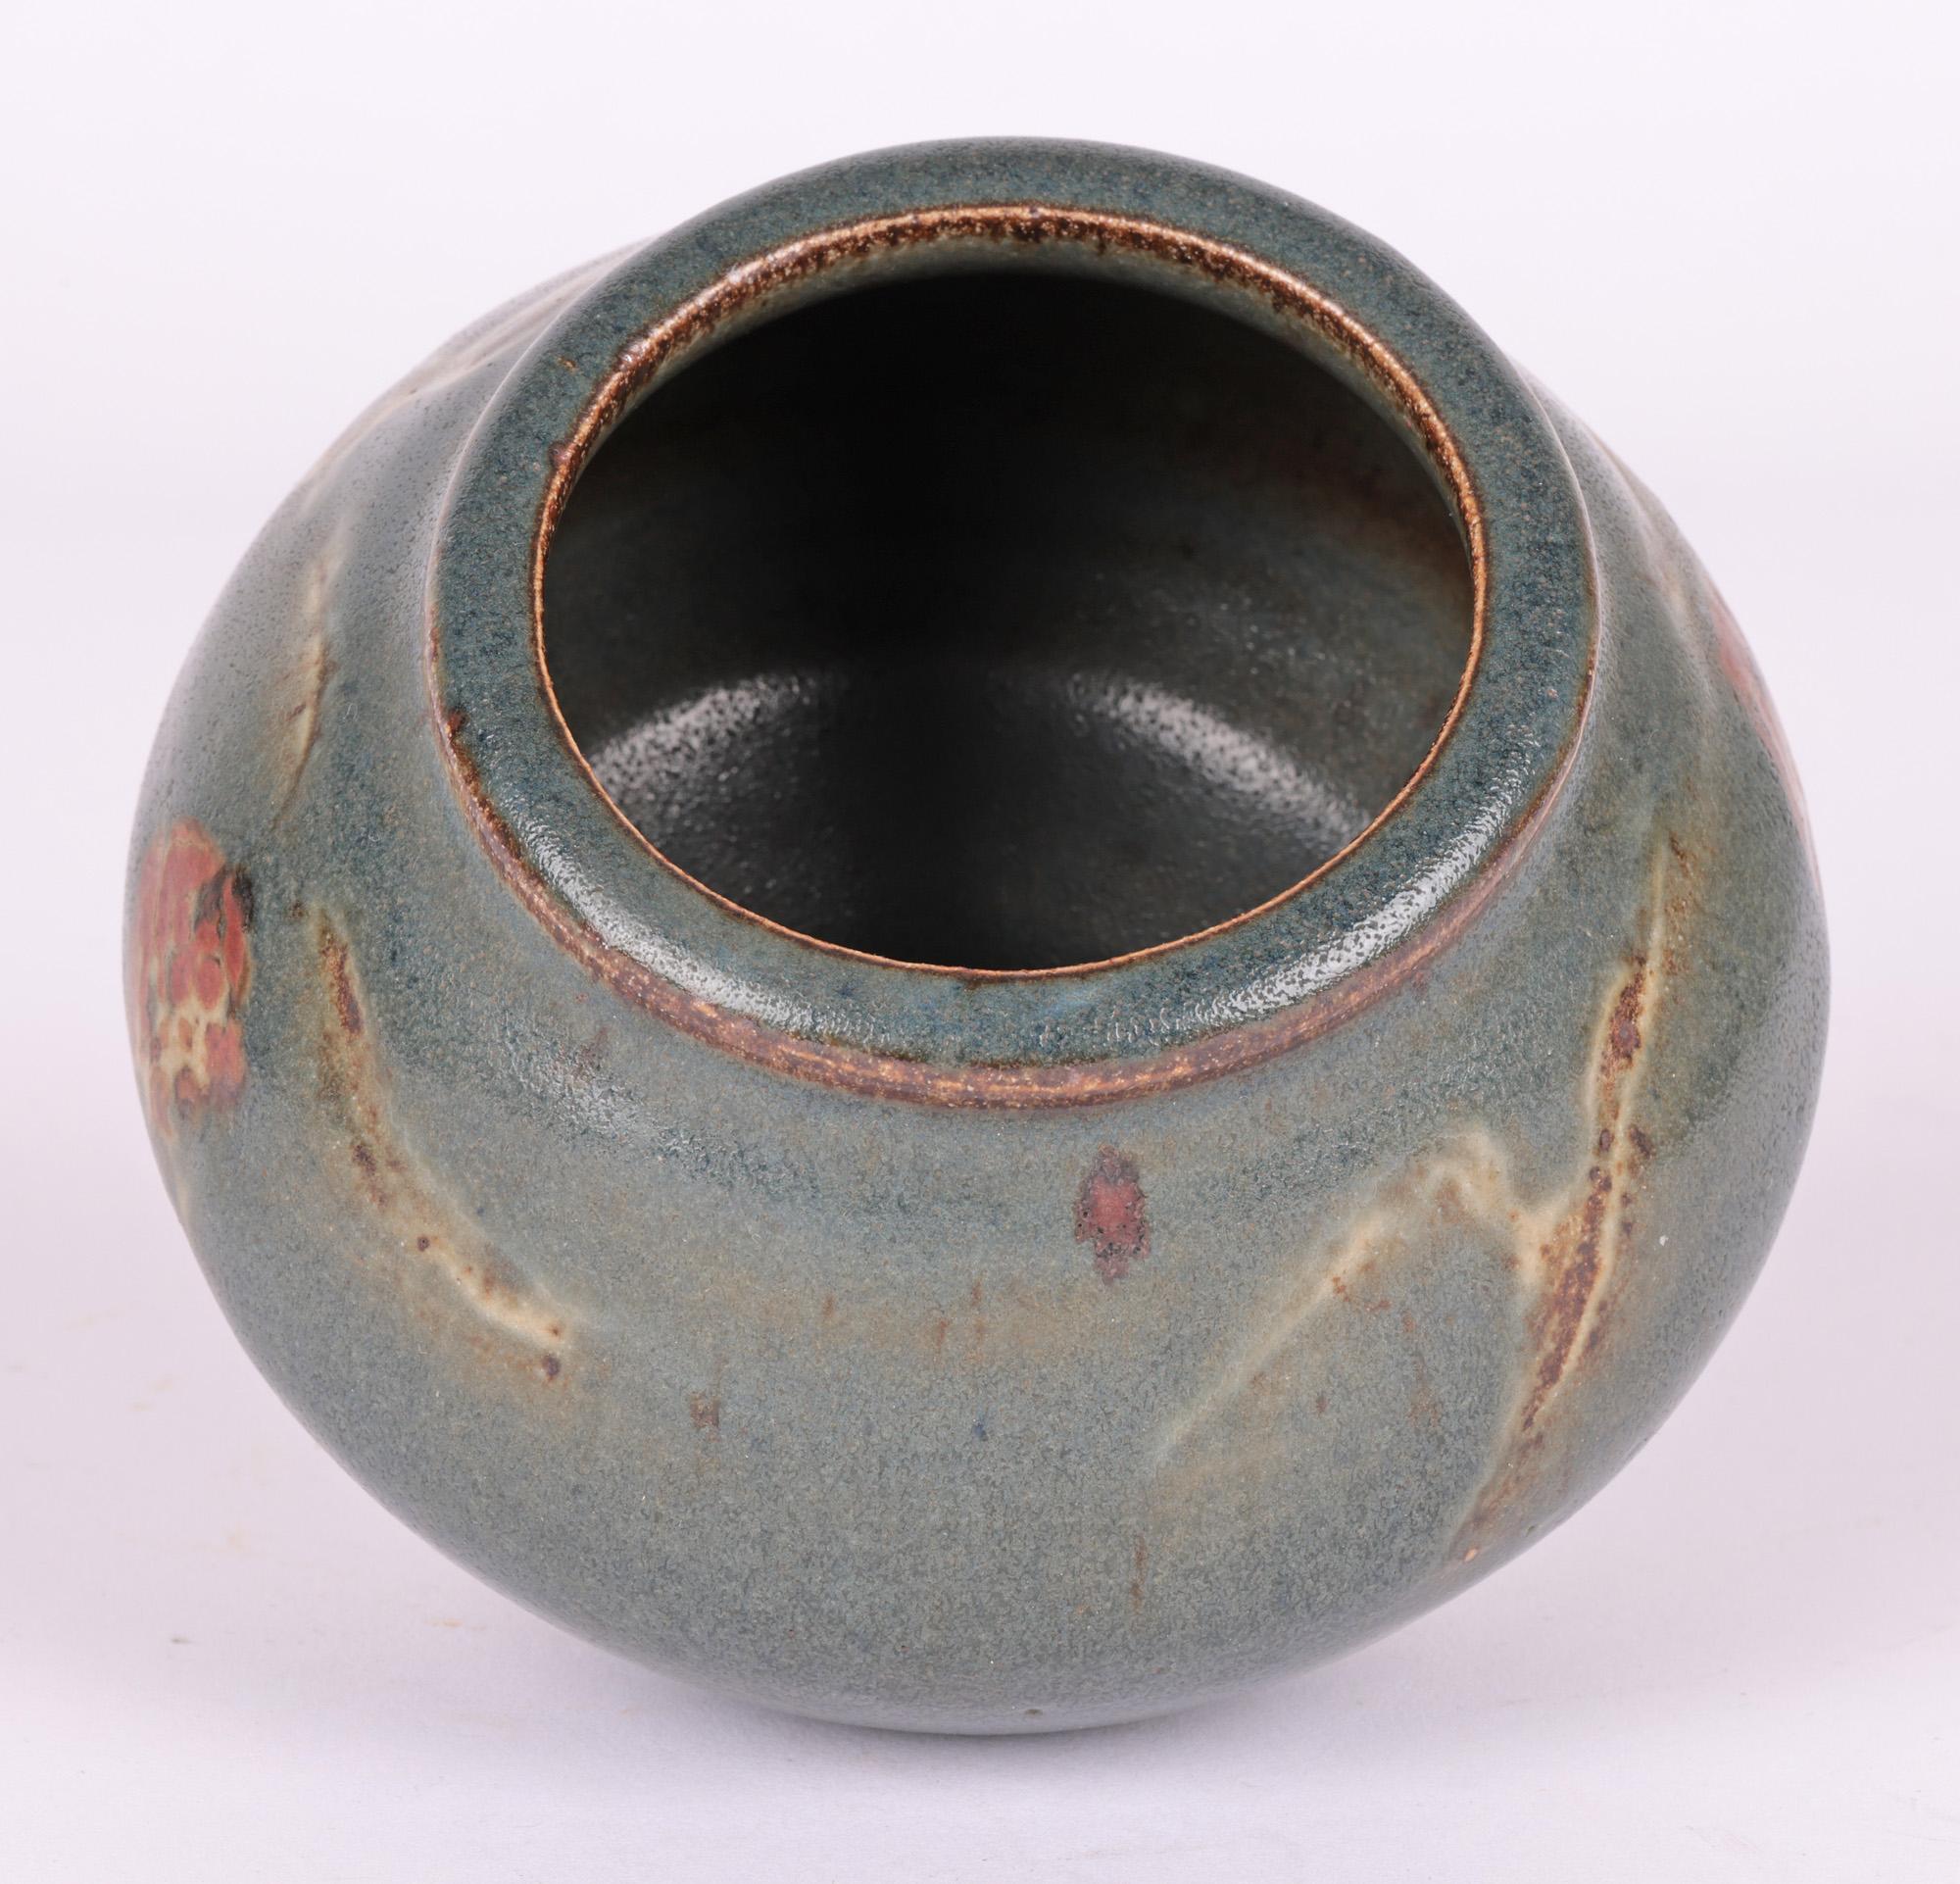 English Bernard Howell Leach Studio Pottery Vase with Stylized Patterning